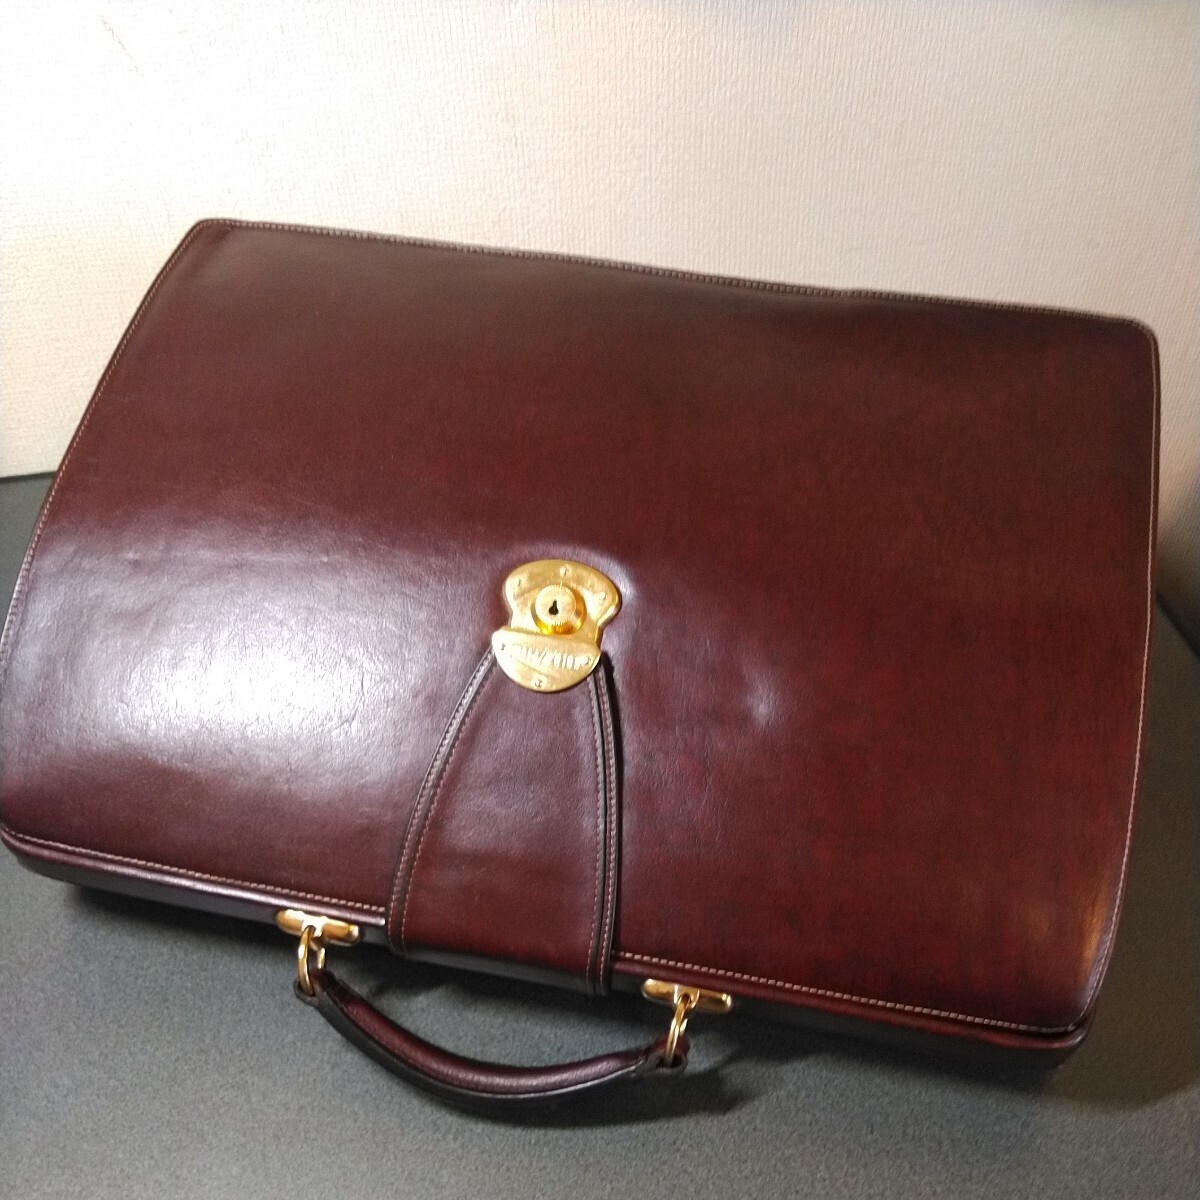  super-beauty goods GOLD PFEIL leather Dulles bag oxford 